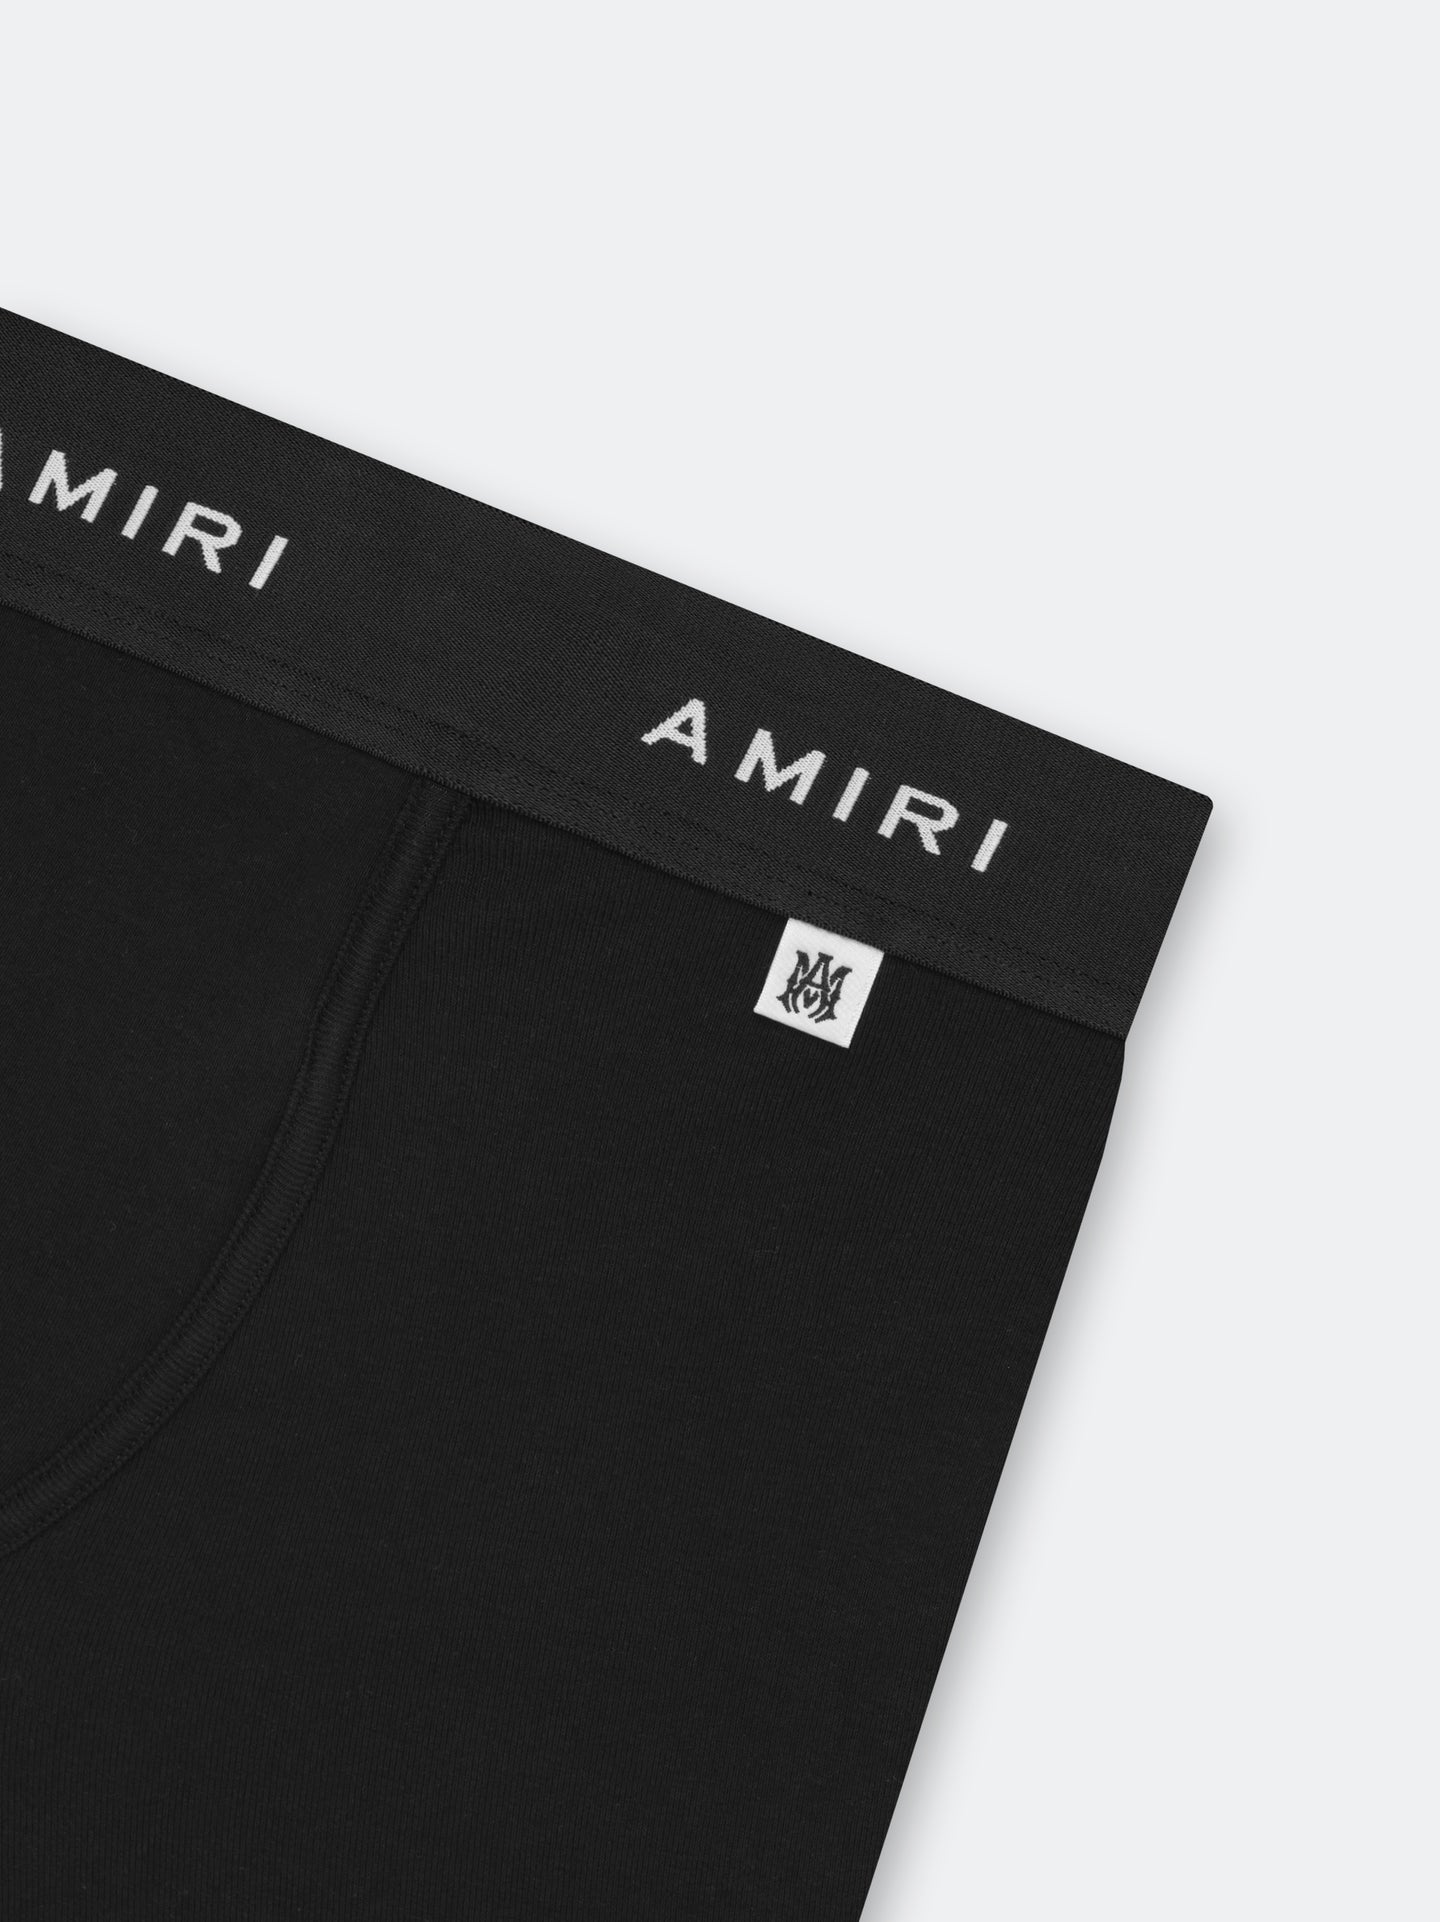 AMIRI BRIEF - Black